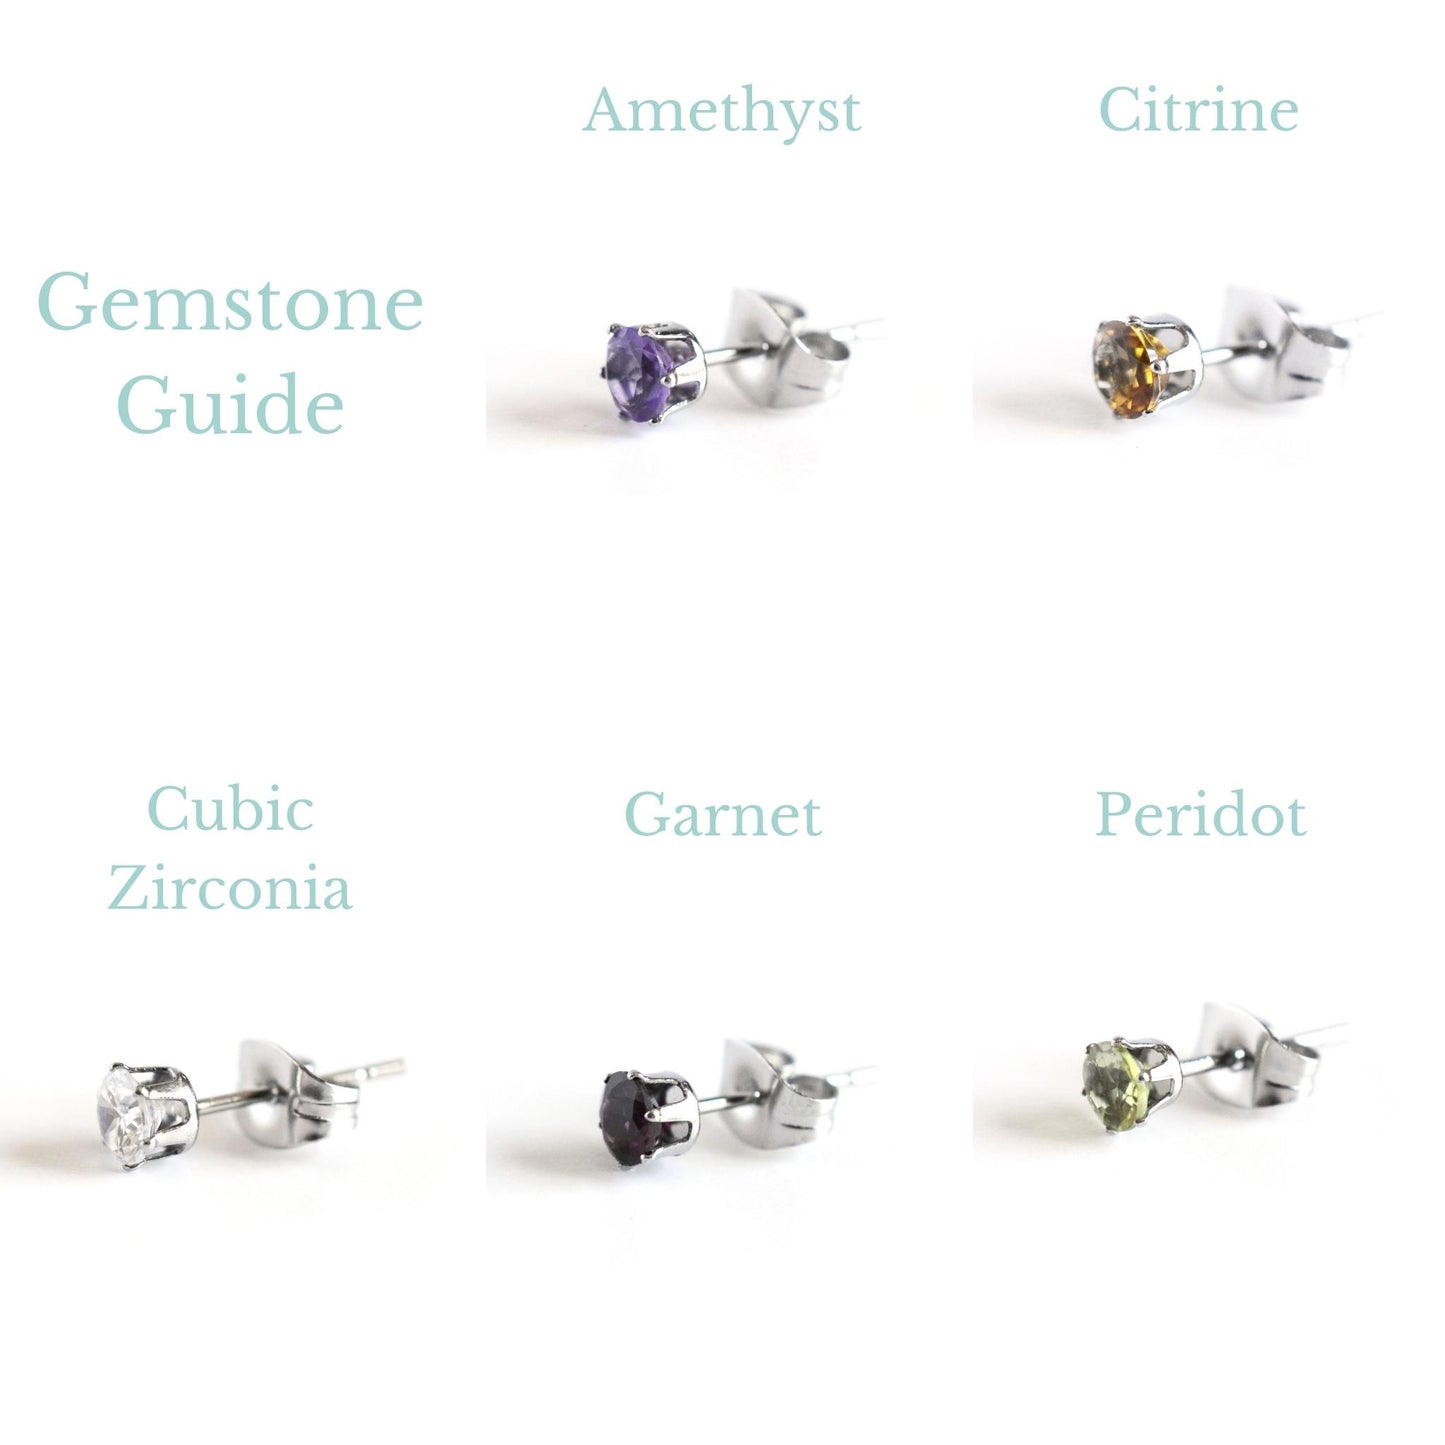 Gemstone colour guide - Amethyst, Citrine, Cubic Zirconia, Garnet & Peridot studs pictured